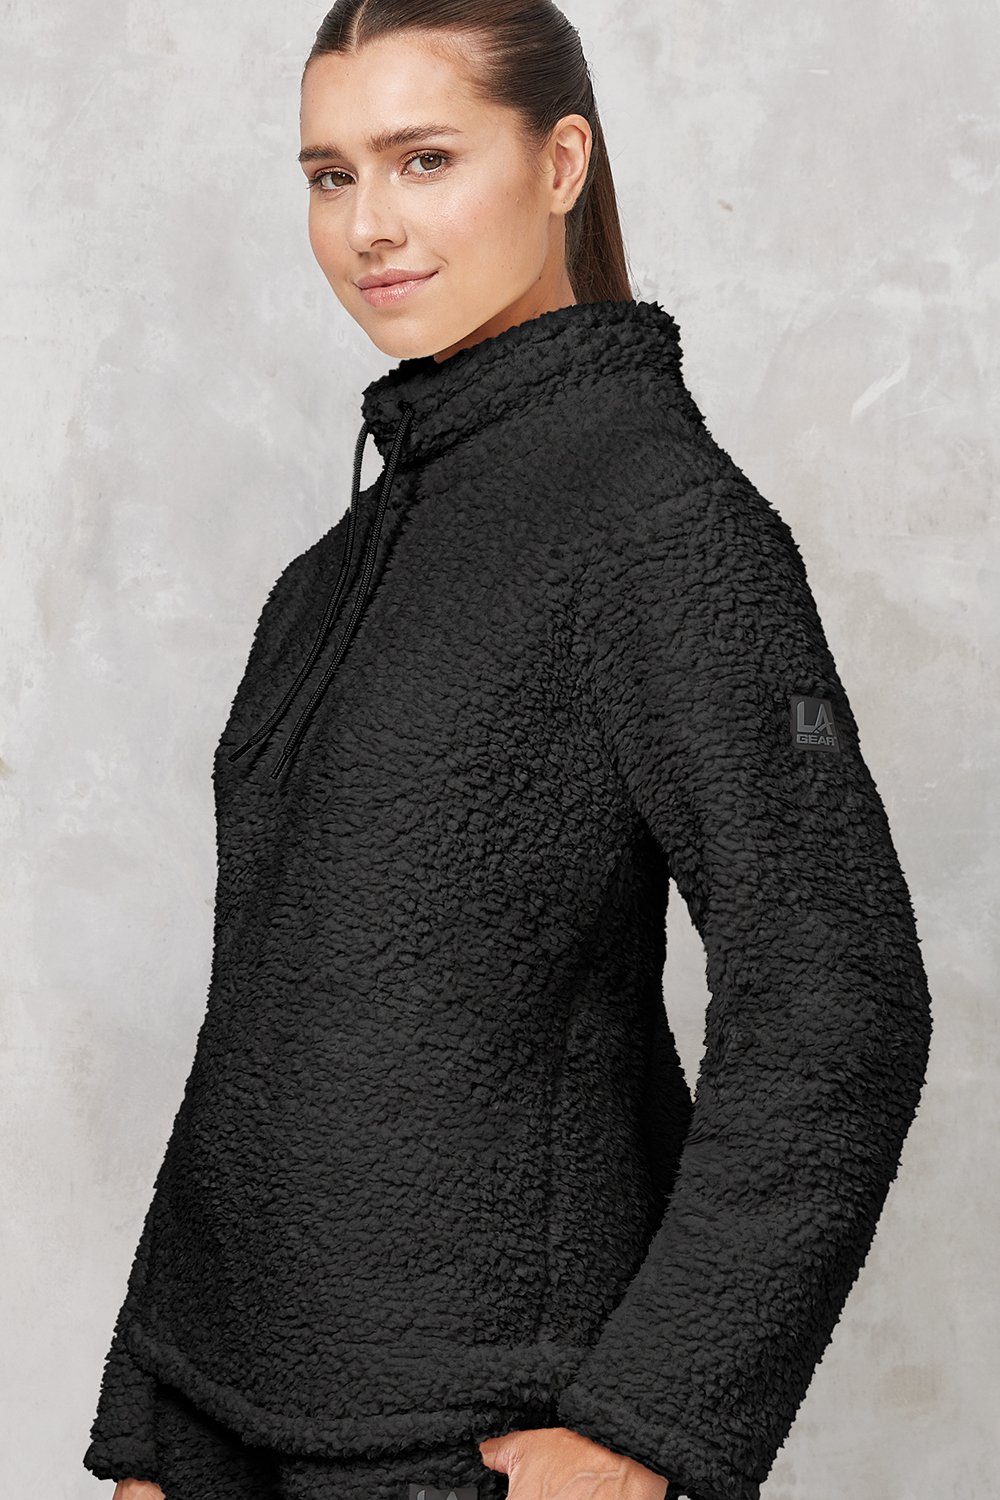 La Gear Sweatshirt Pullover, Teddyfleece anthracit 29459